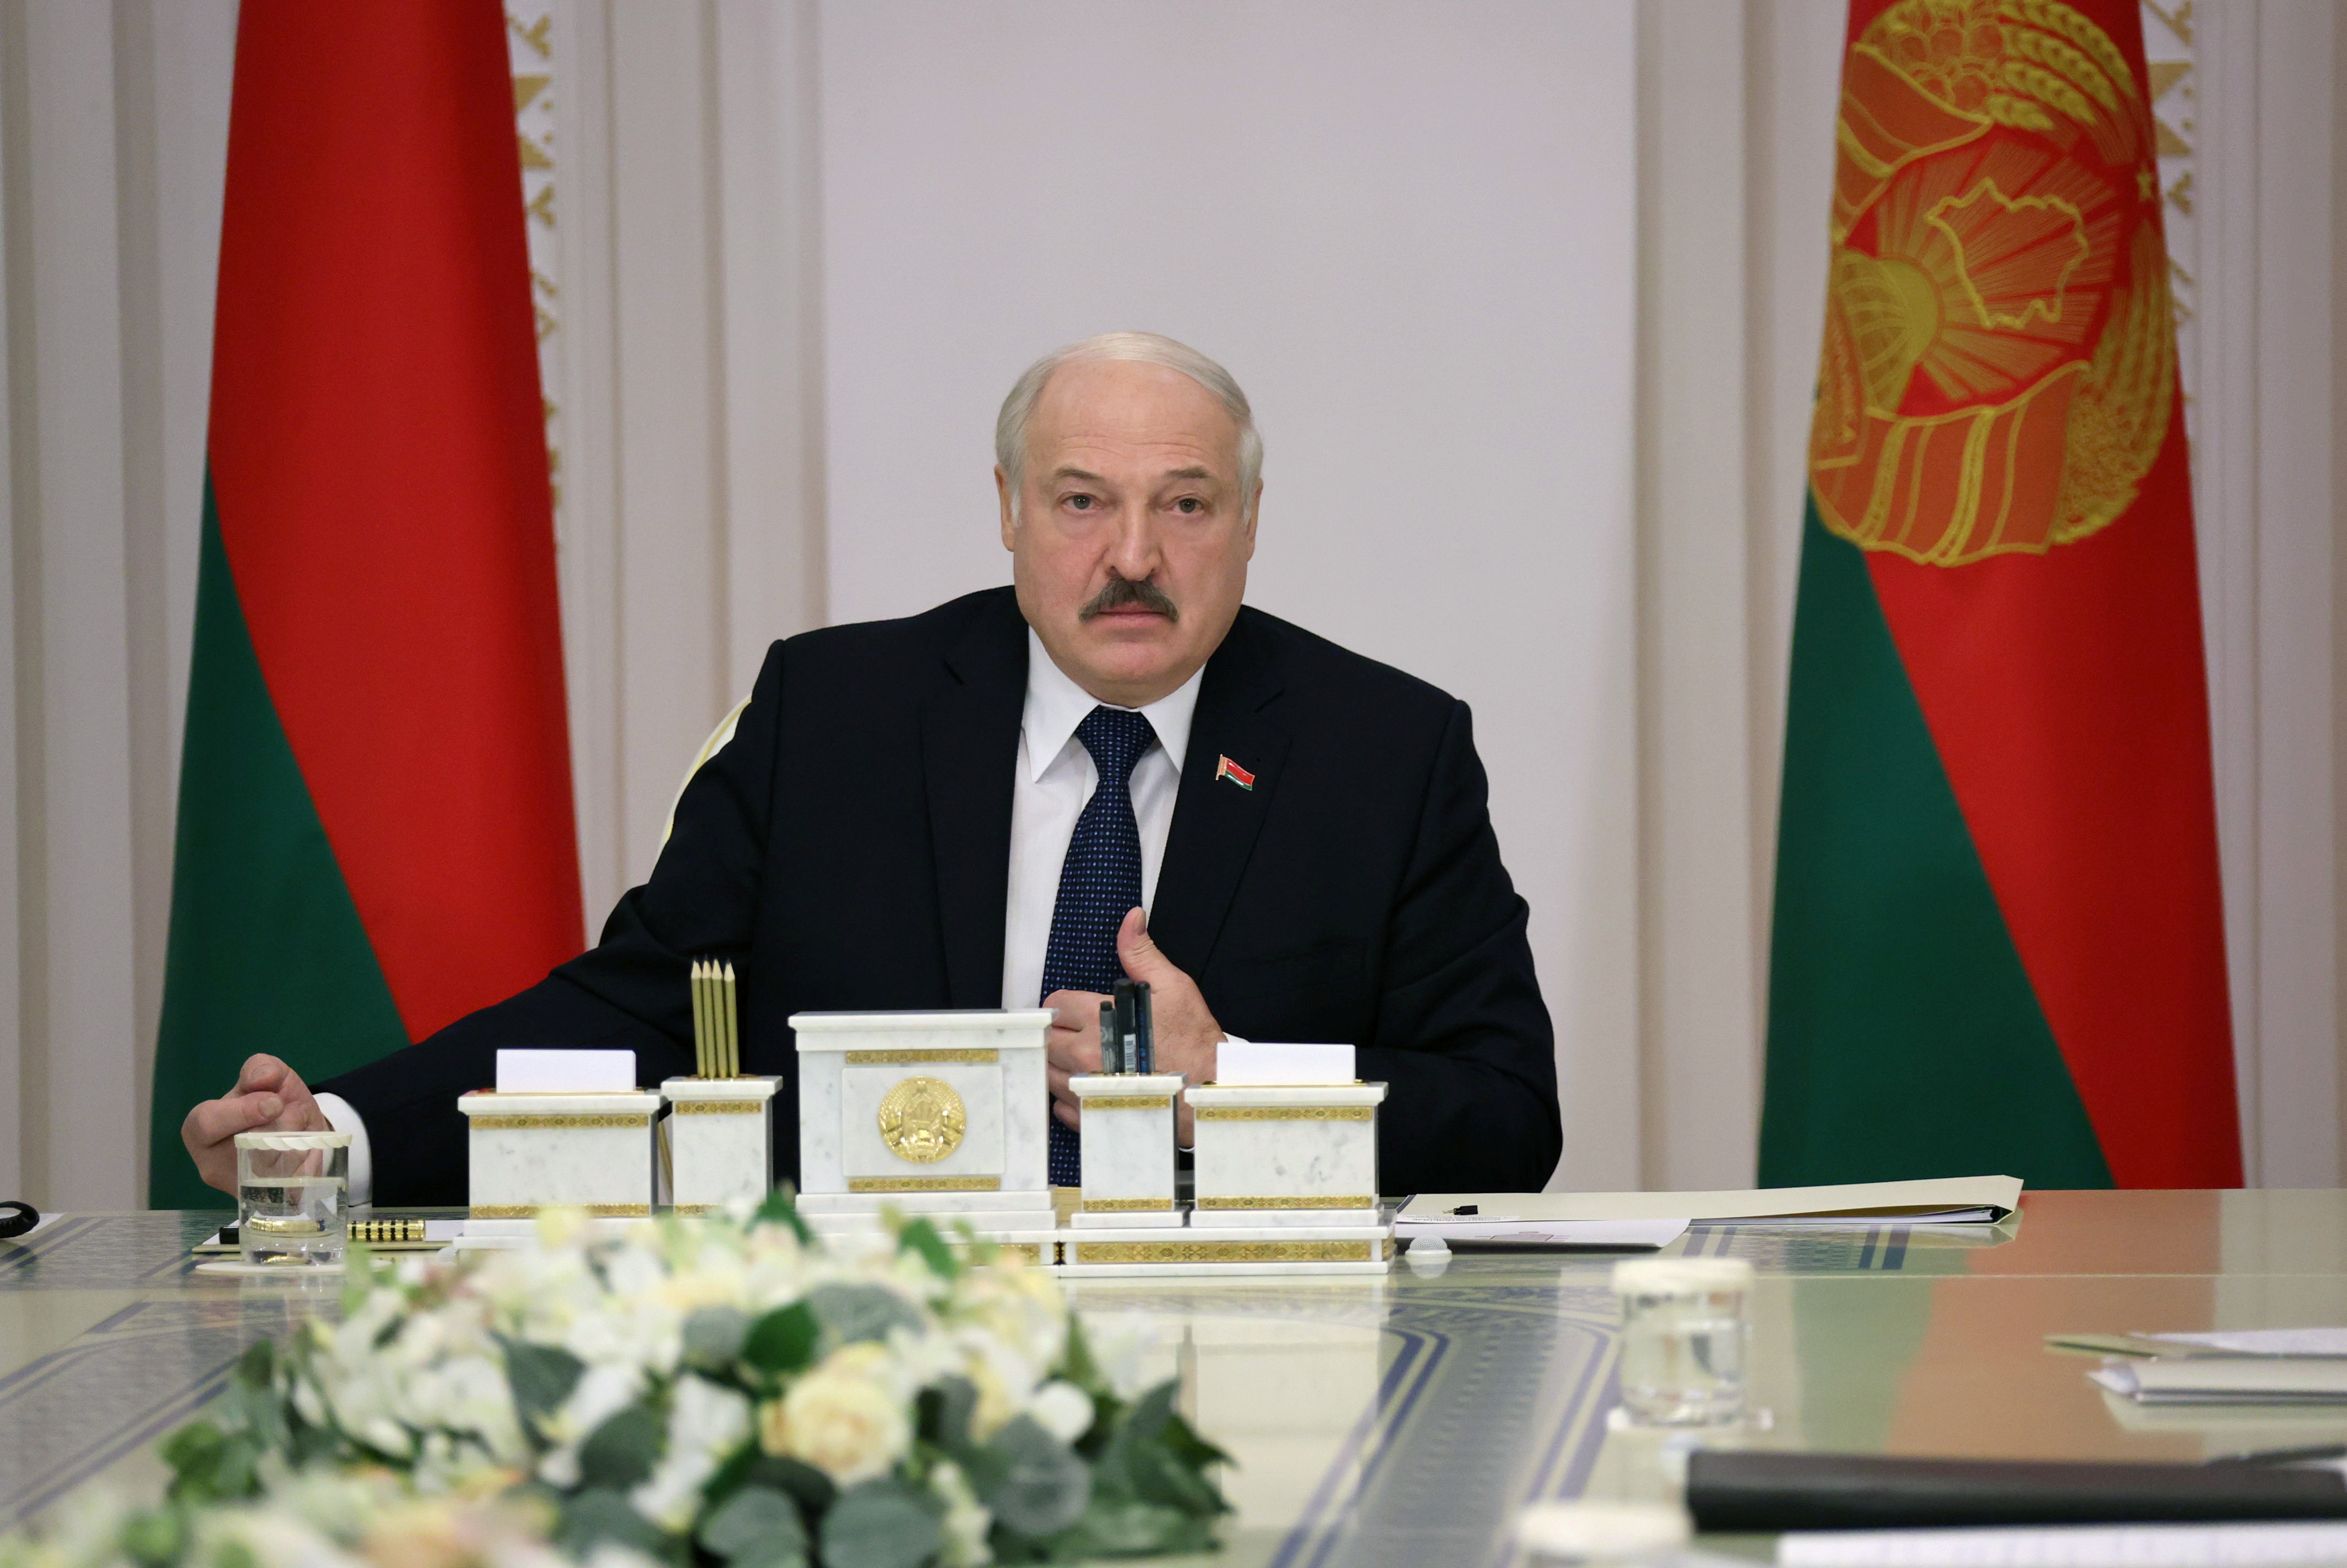 Bielorrusia se juega su neutralidad, dicen expertos DWNSWOQJIVHZ5TR6FECFU2BKAY